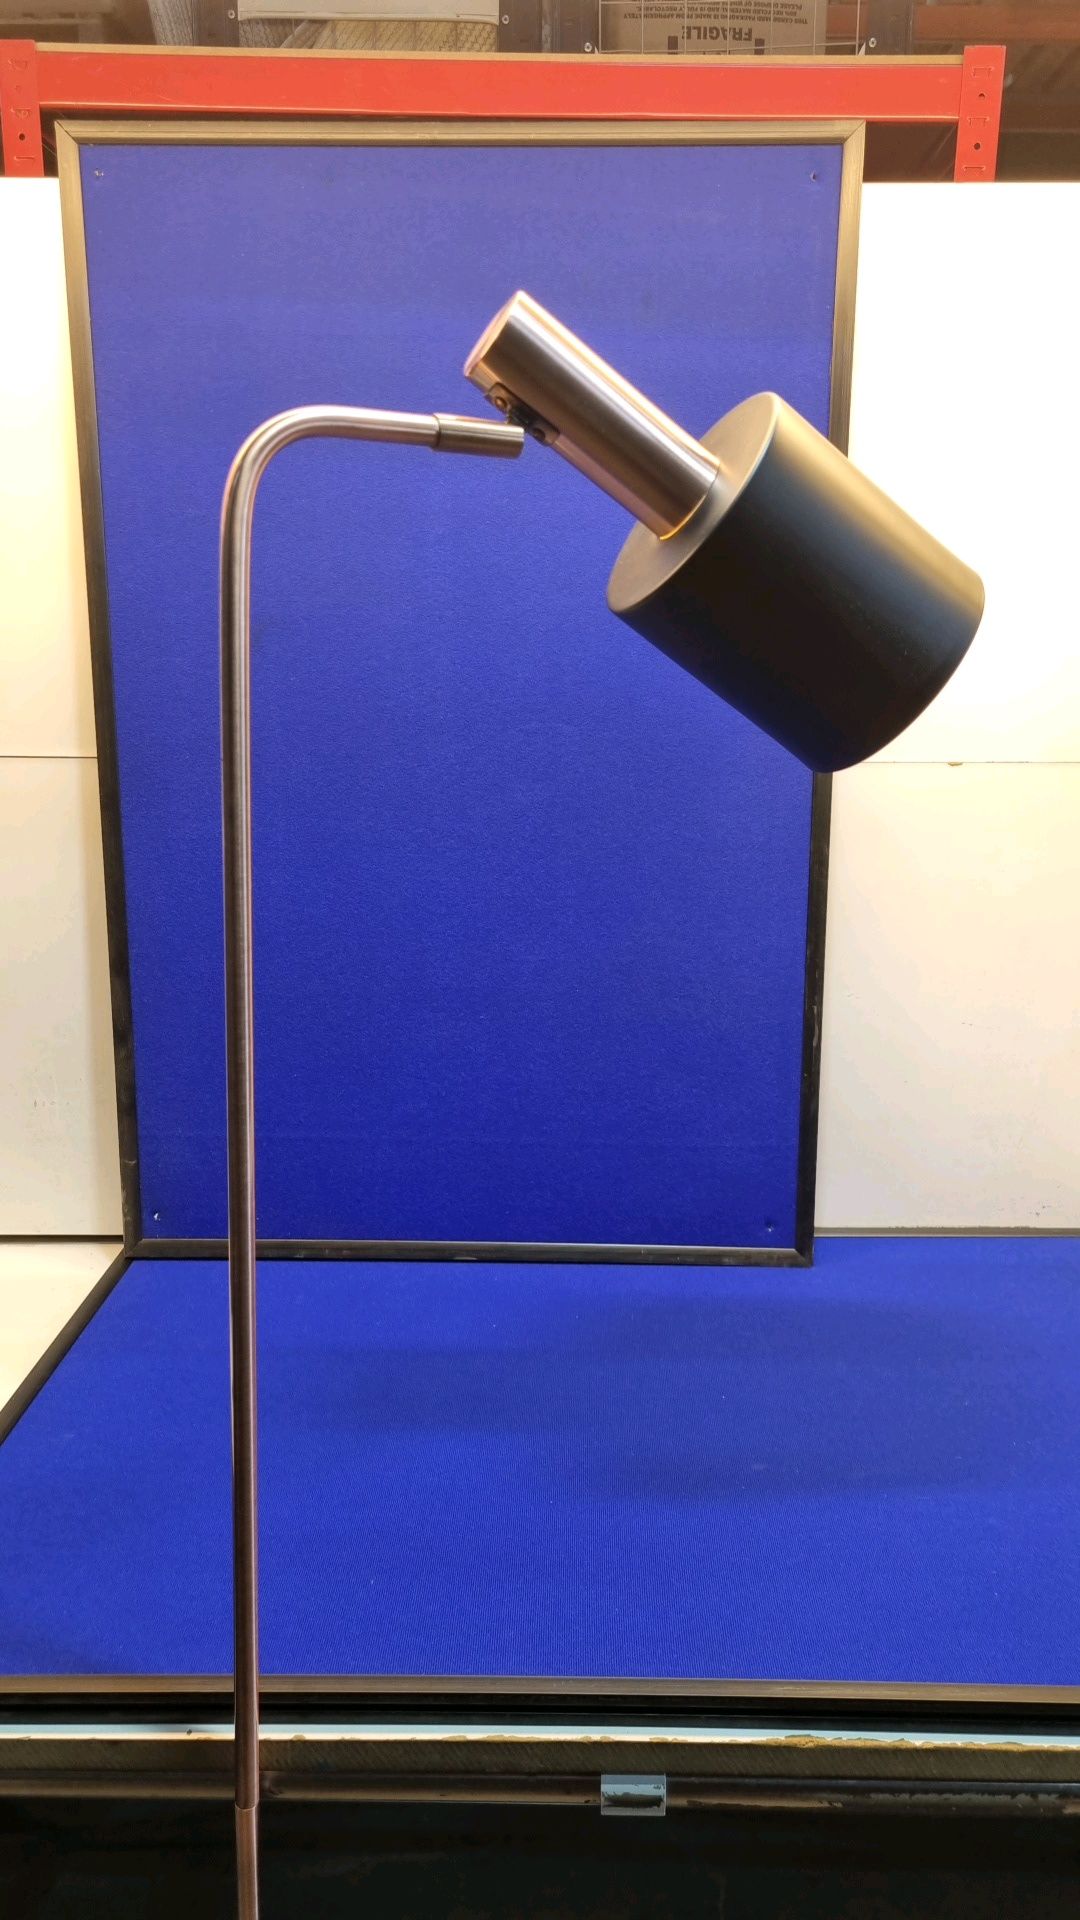 Single Spot Floor Lamp in Black/Copper - Image 4 of 6